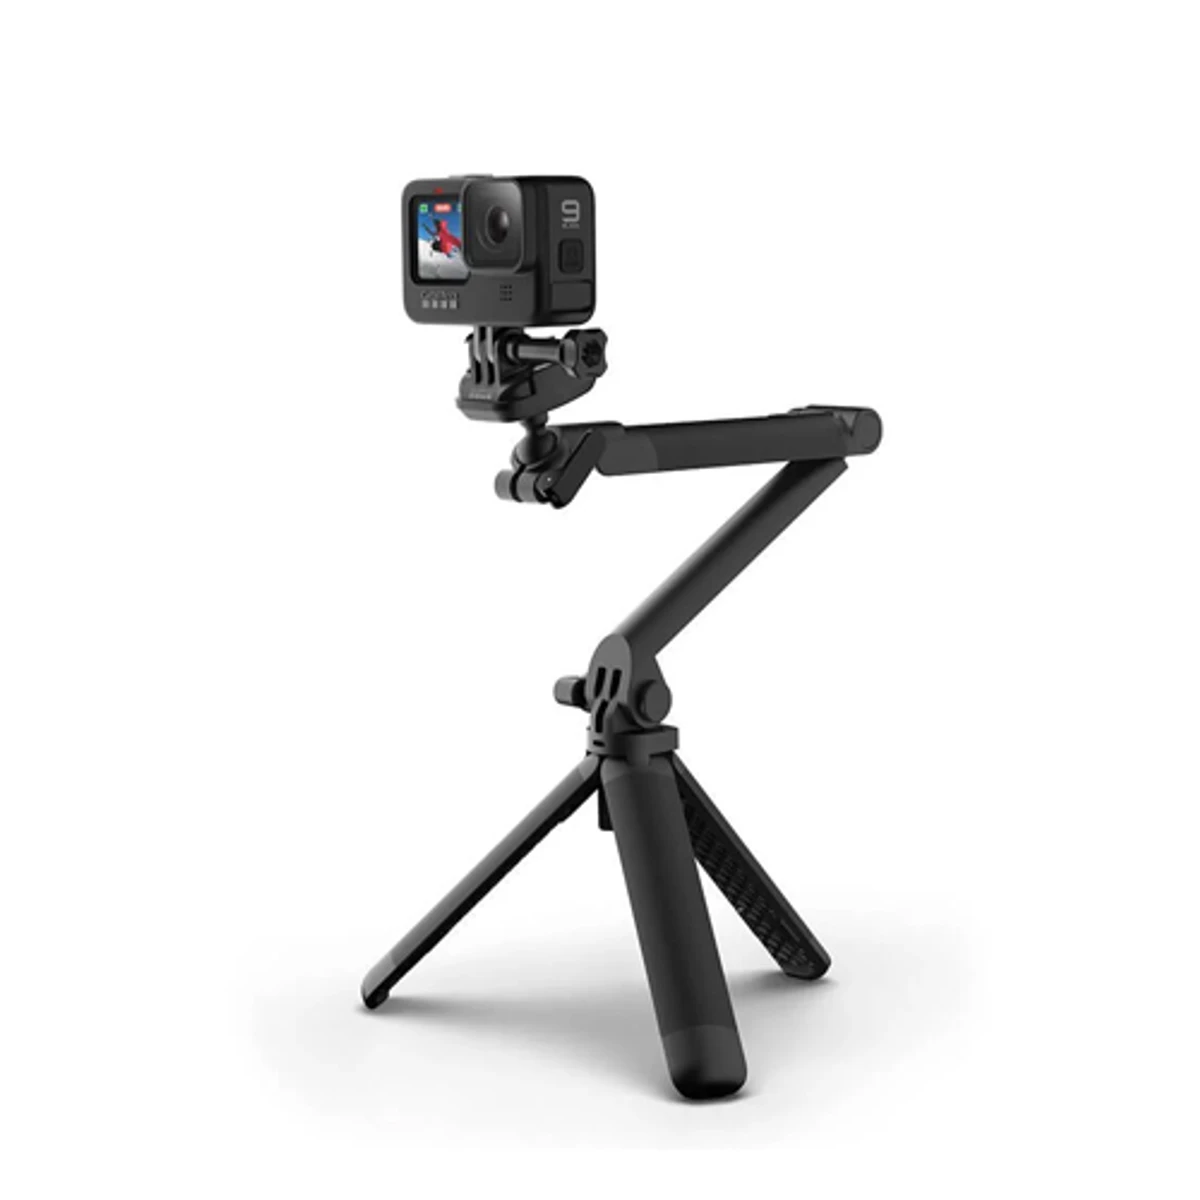 GoPro 3-Way Mount For Action Camera (AFAEM-001)